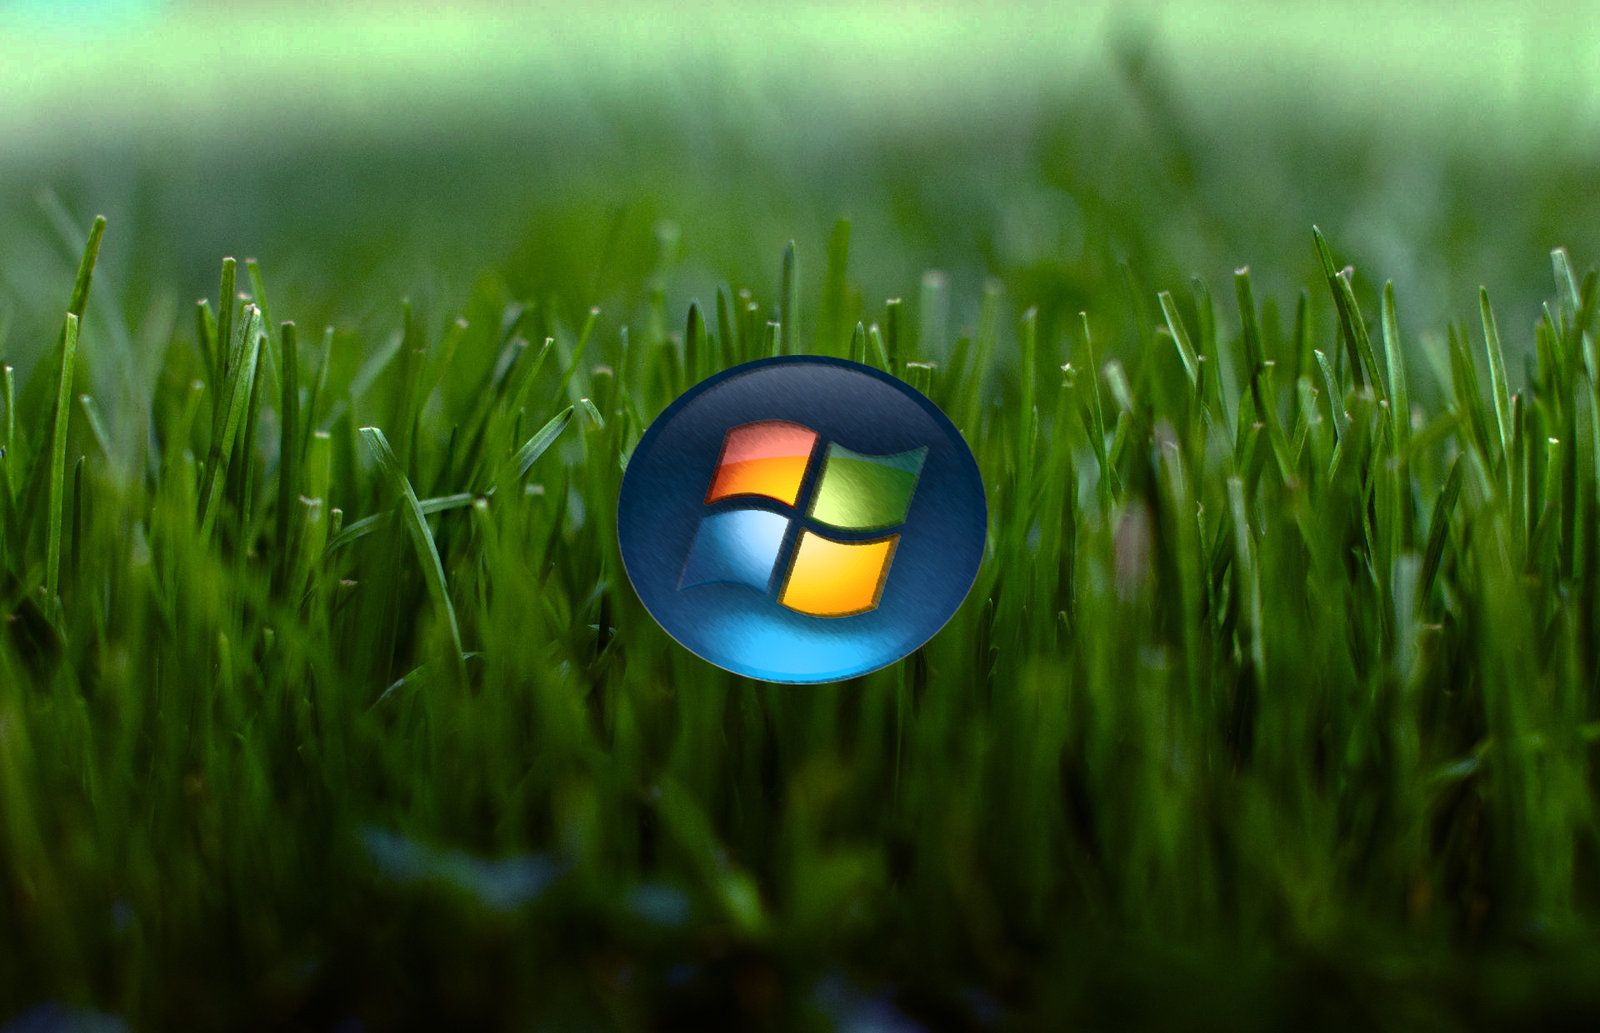 Windows 7 Grass wallpaper by steffono6 on DeviantArt